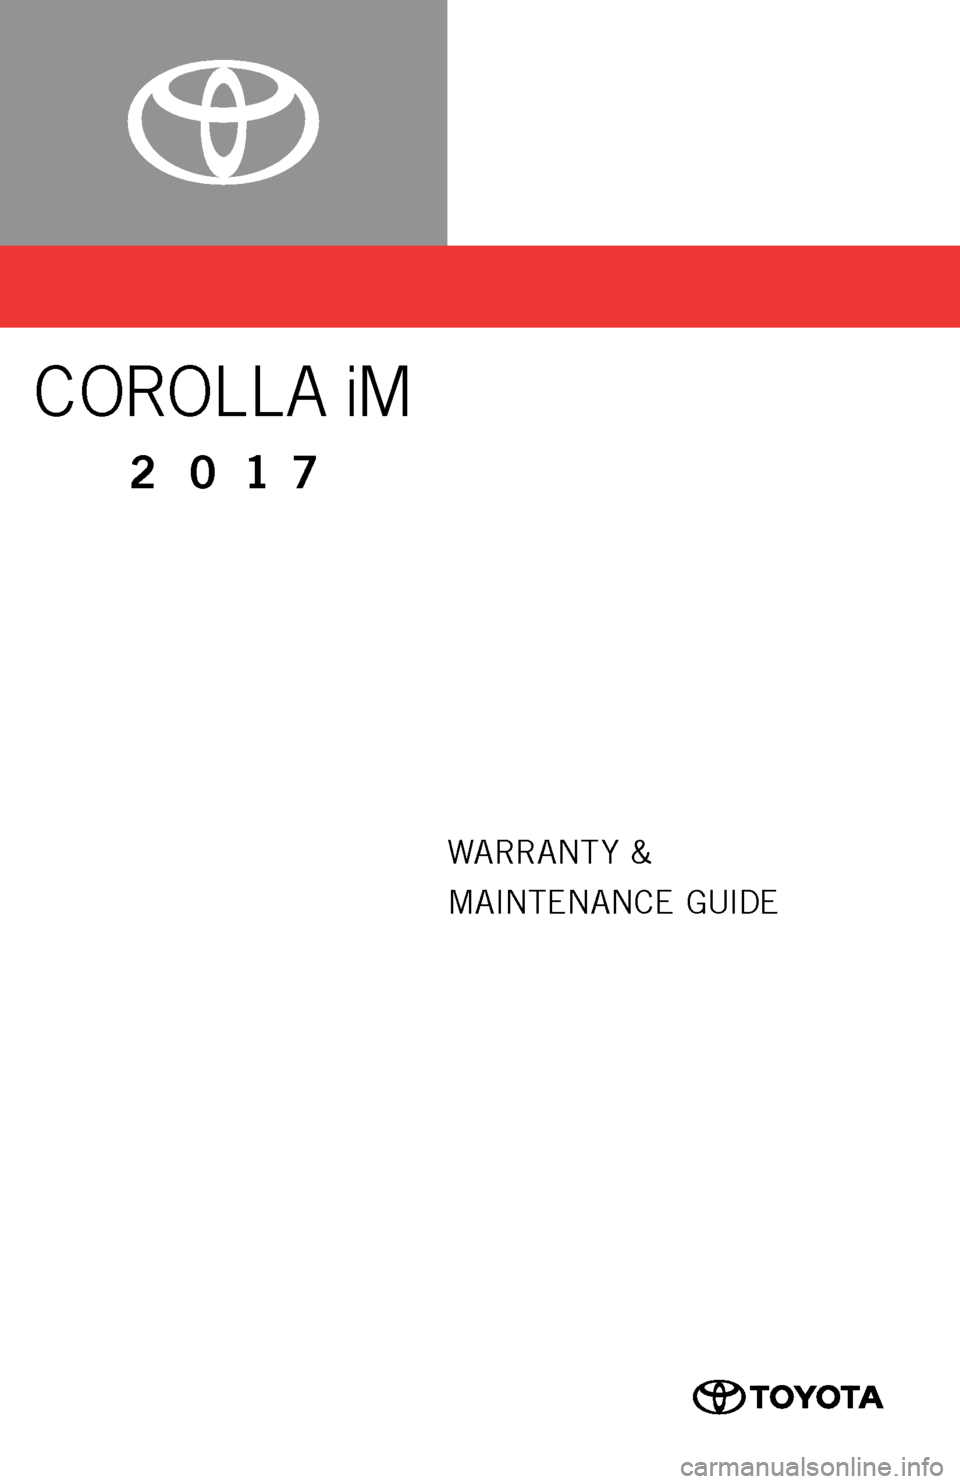 TOYOTA COROLLA iM 2017 11.G Warranty And Maintenance Guide 0050517WMGCORIM
WARRANT Y &
MAINTENANCE  GUIDE
COROLLA iM
2017
16-TCS-09407_WMG_Corolla_iM_2_0F_lm.indd   27/20/16   8:14 PM  